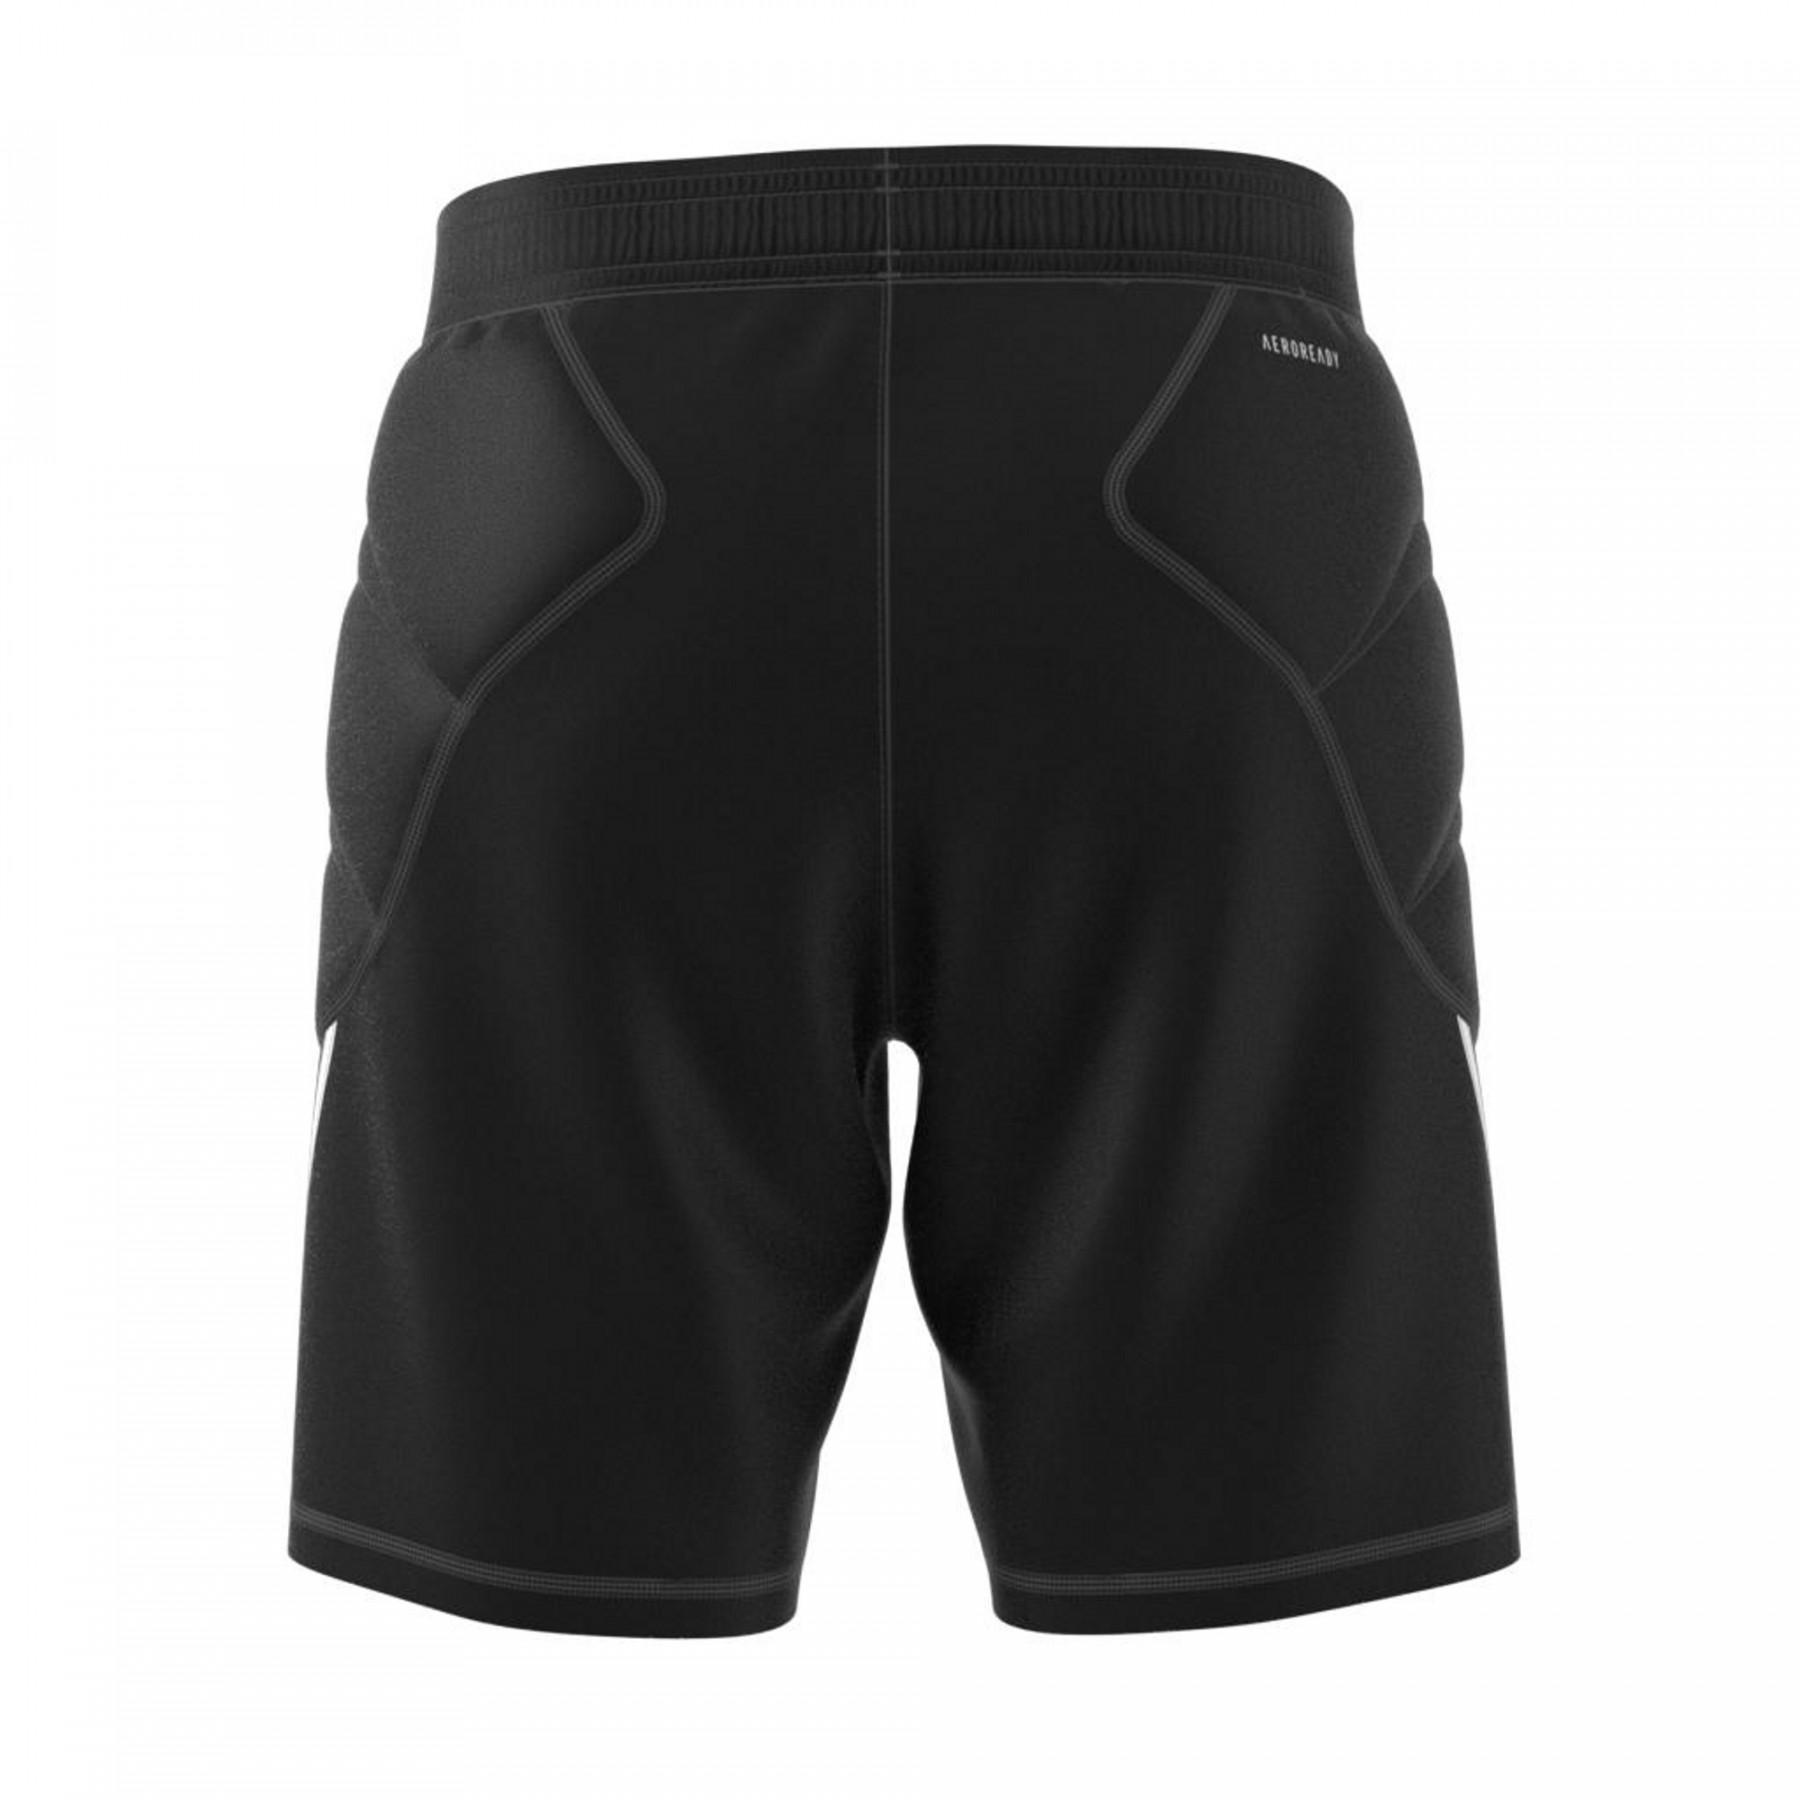 Goalkeeper shorts adidas Tierro